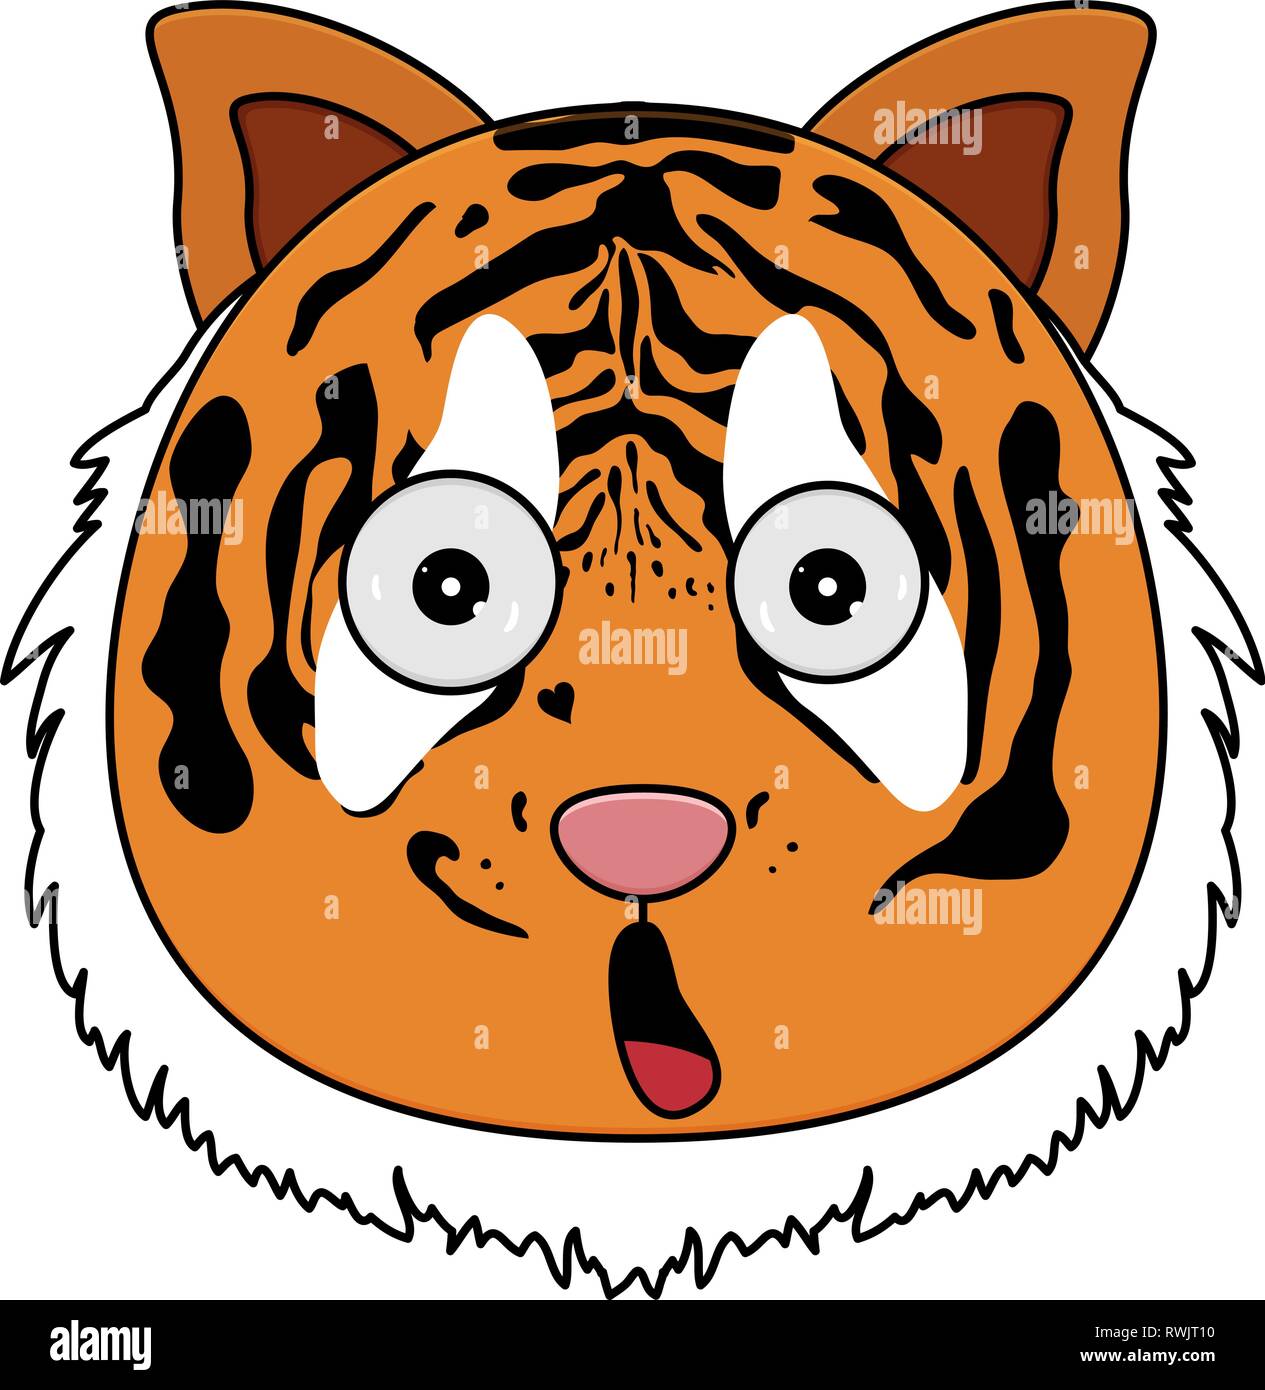 Tete De Tigre Dans Un Style De Dessin Anime Kawaii Animal Image Vectorielle Stock Alamy